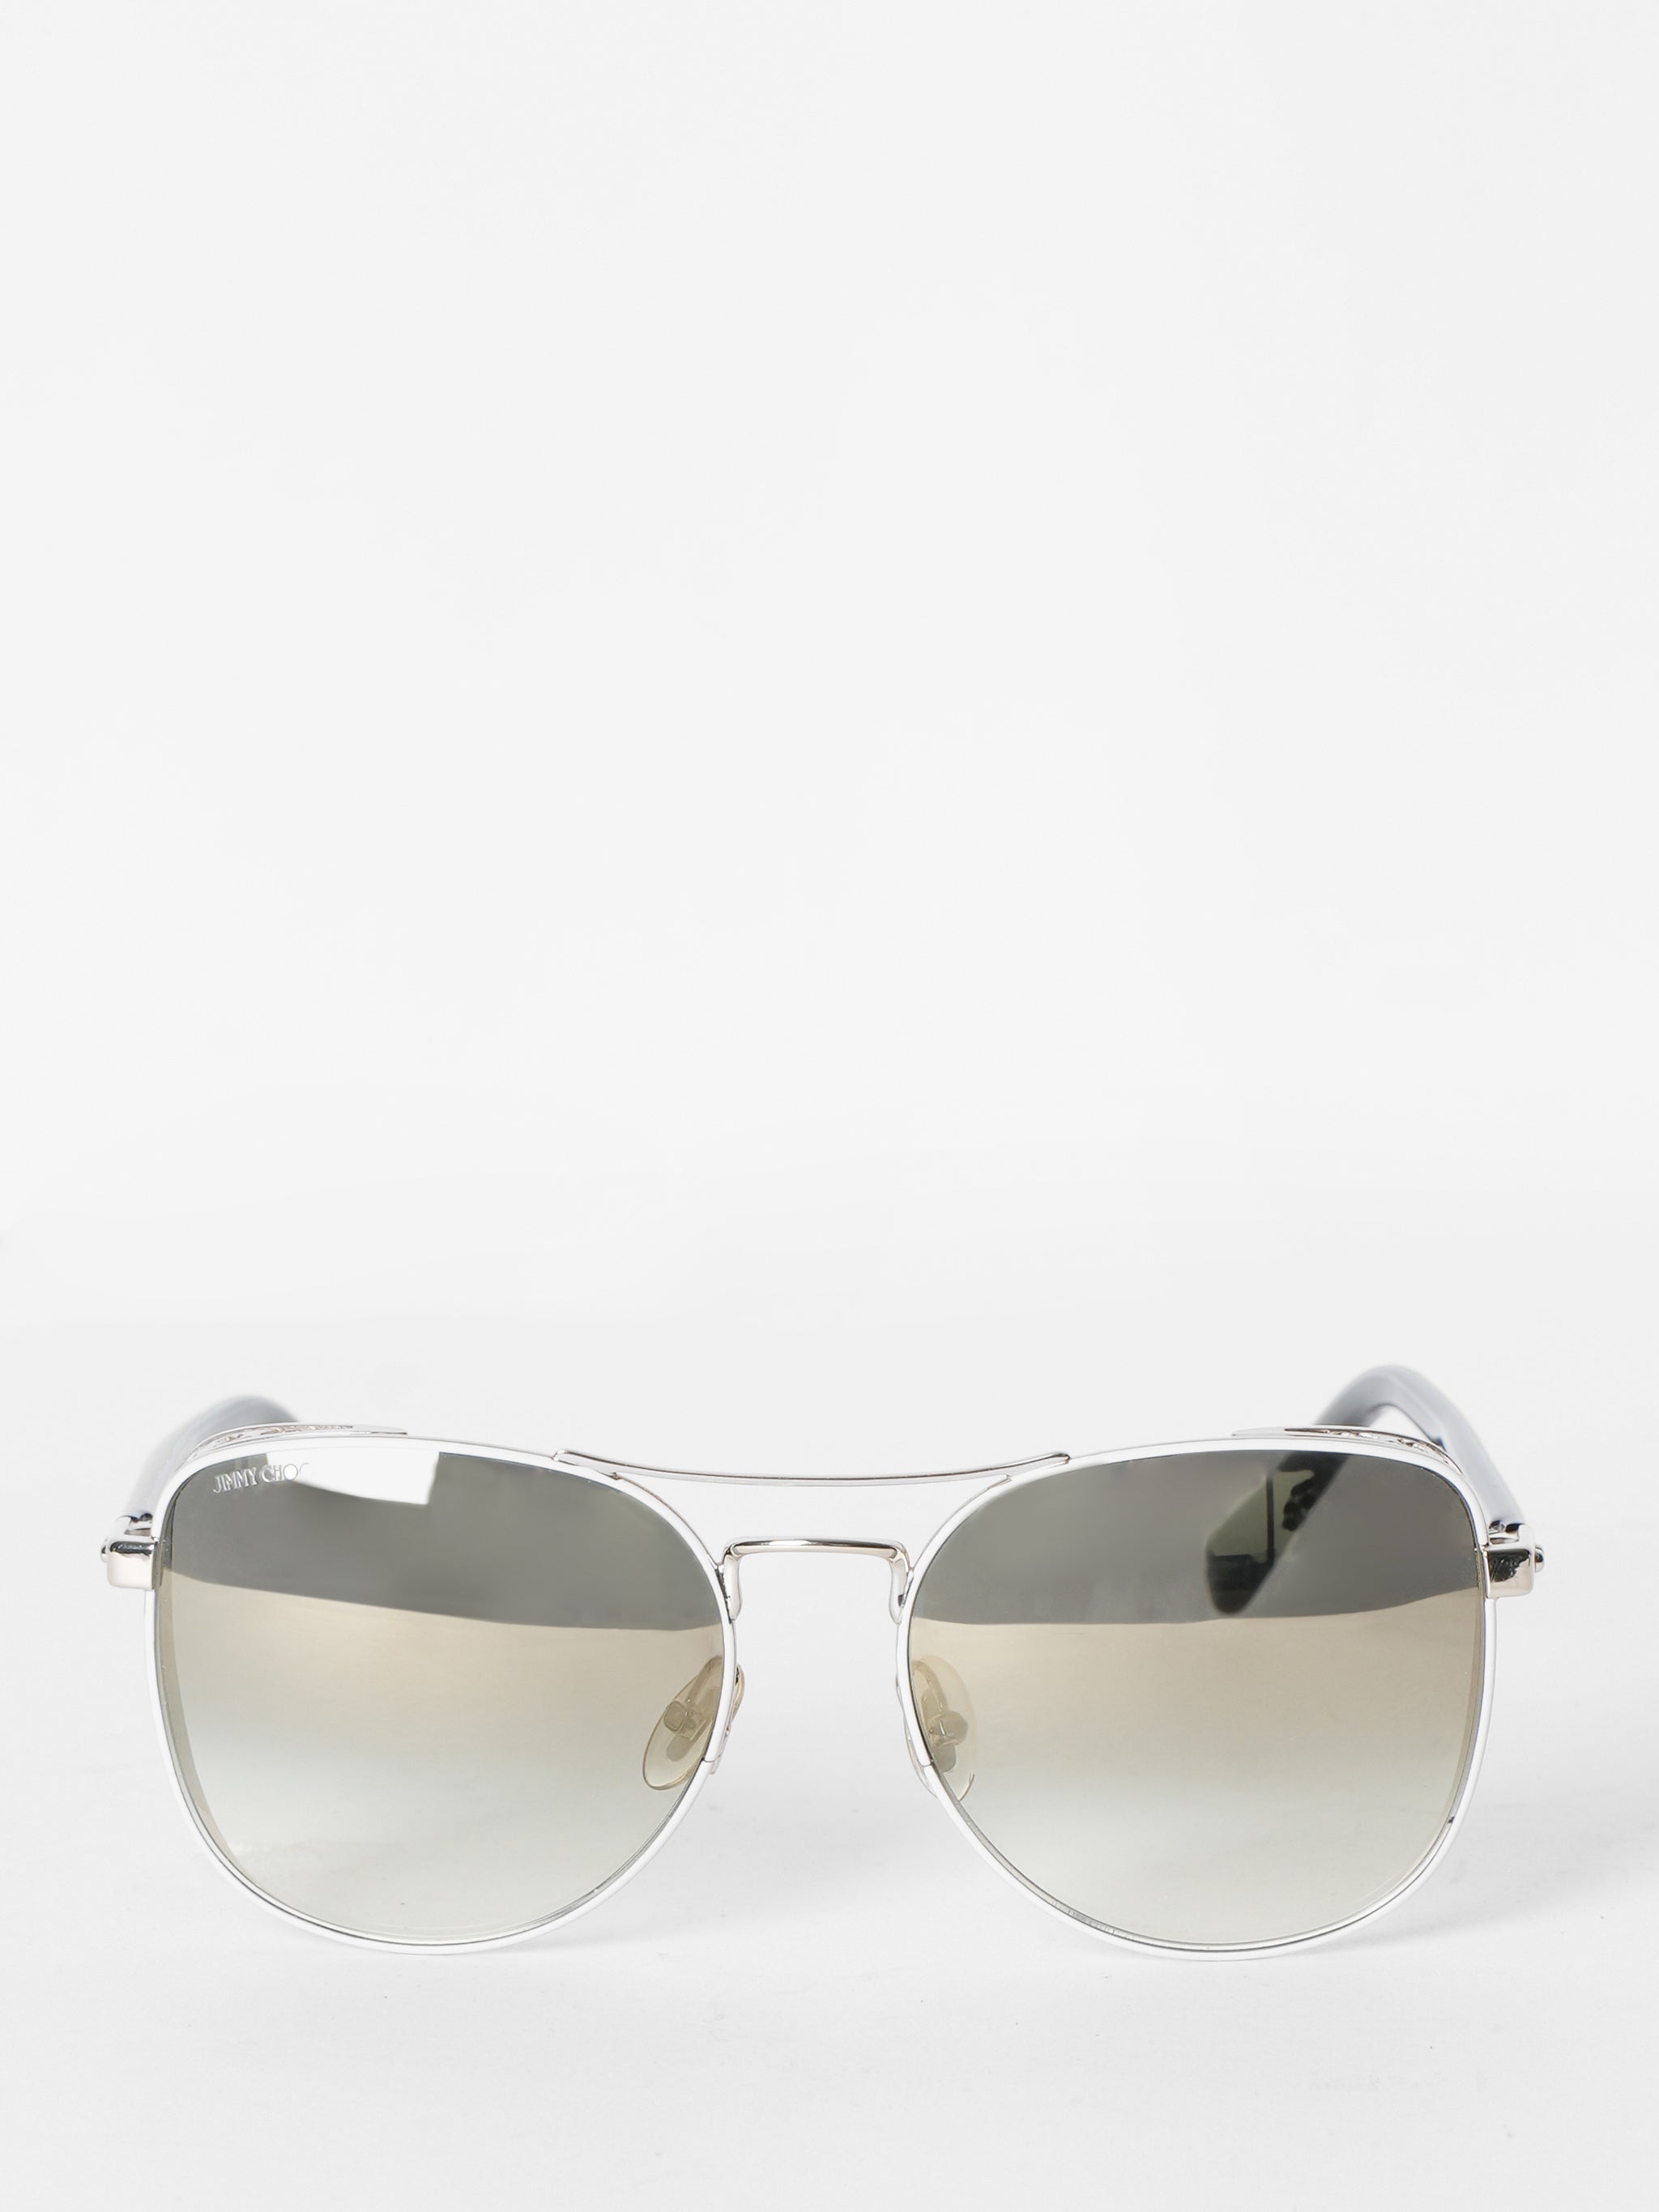 Jimmy Choo Sheena Metal Oval Sunglasses